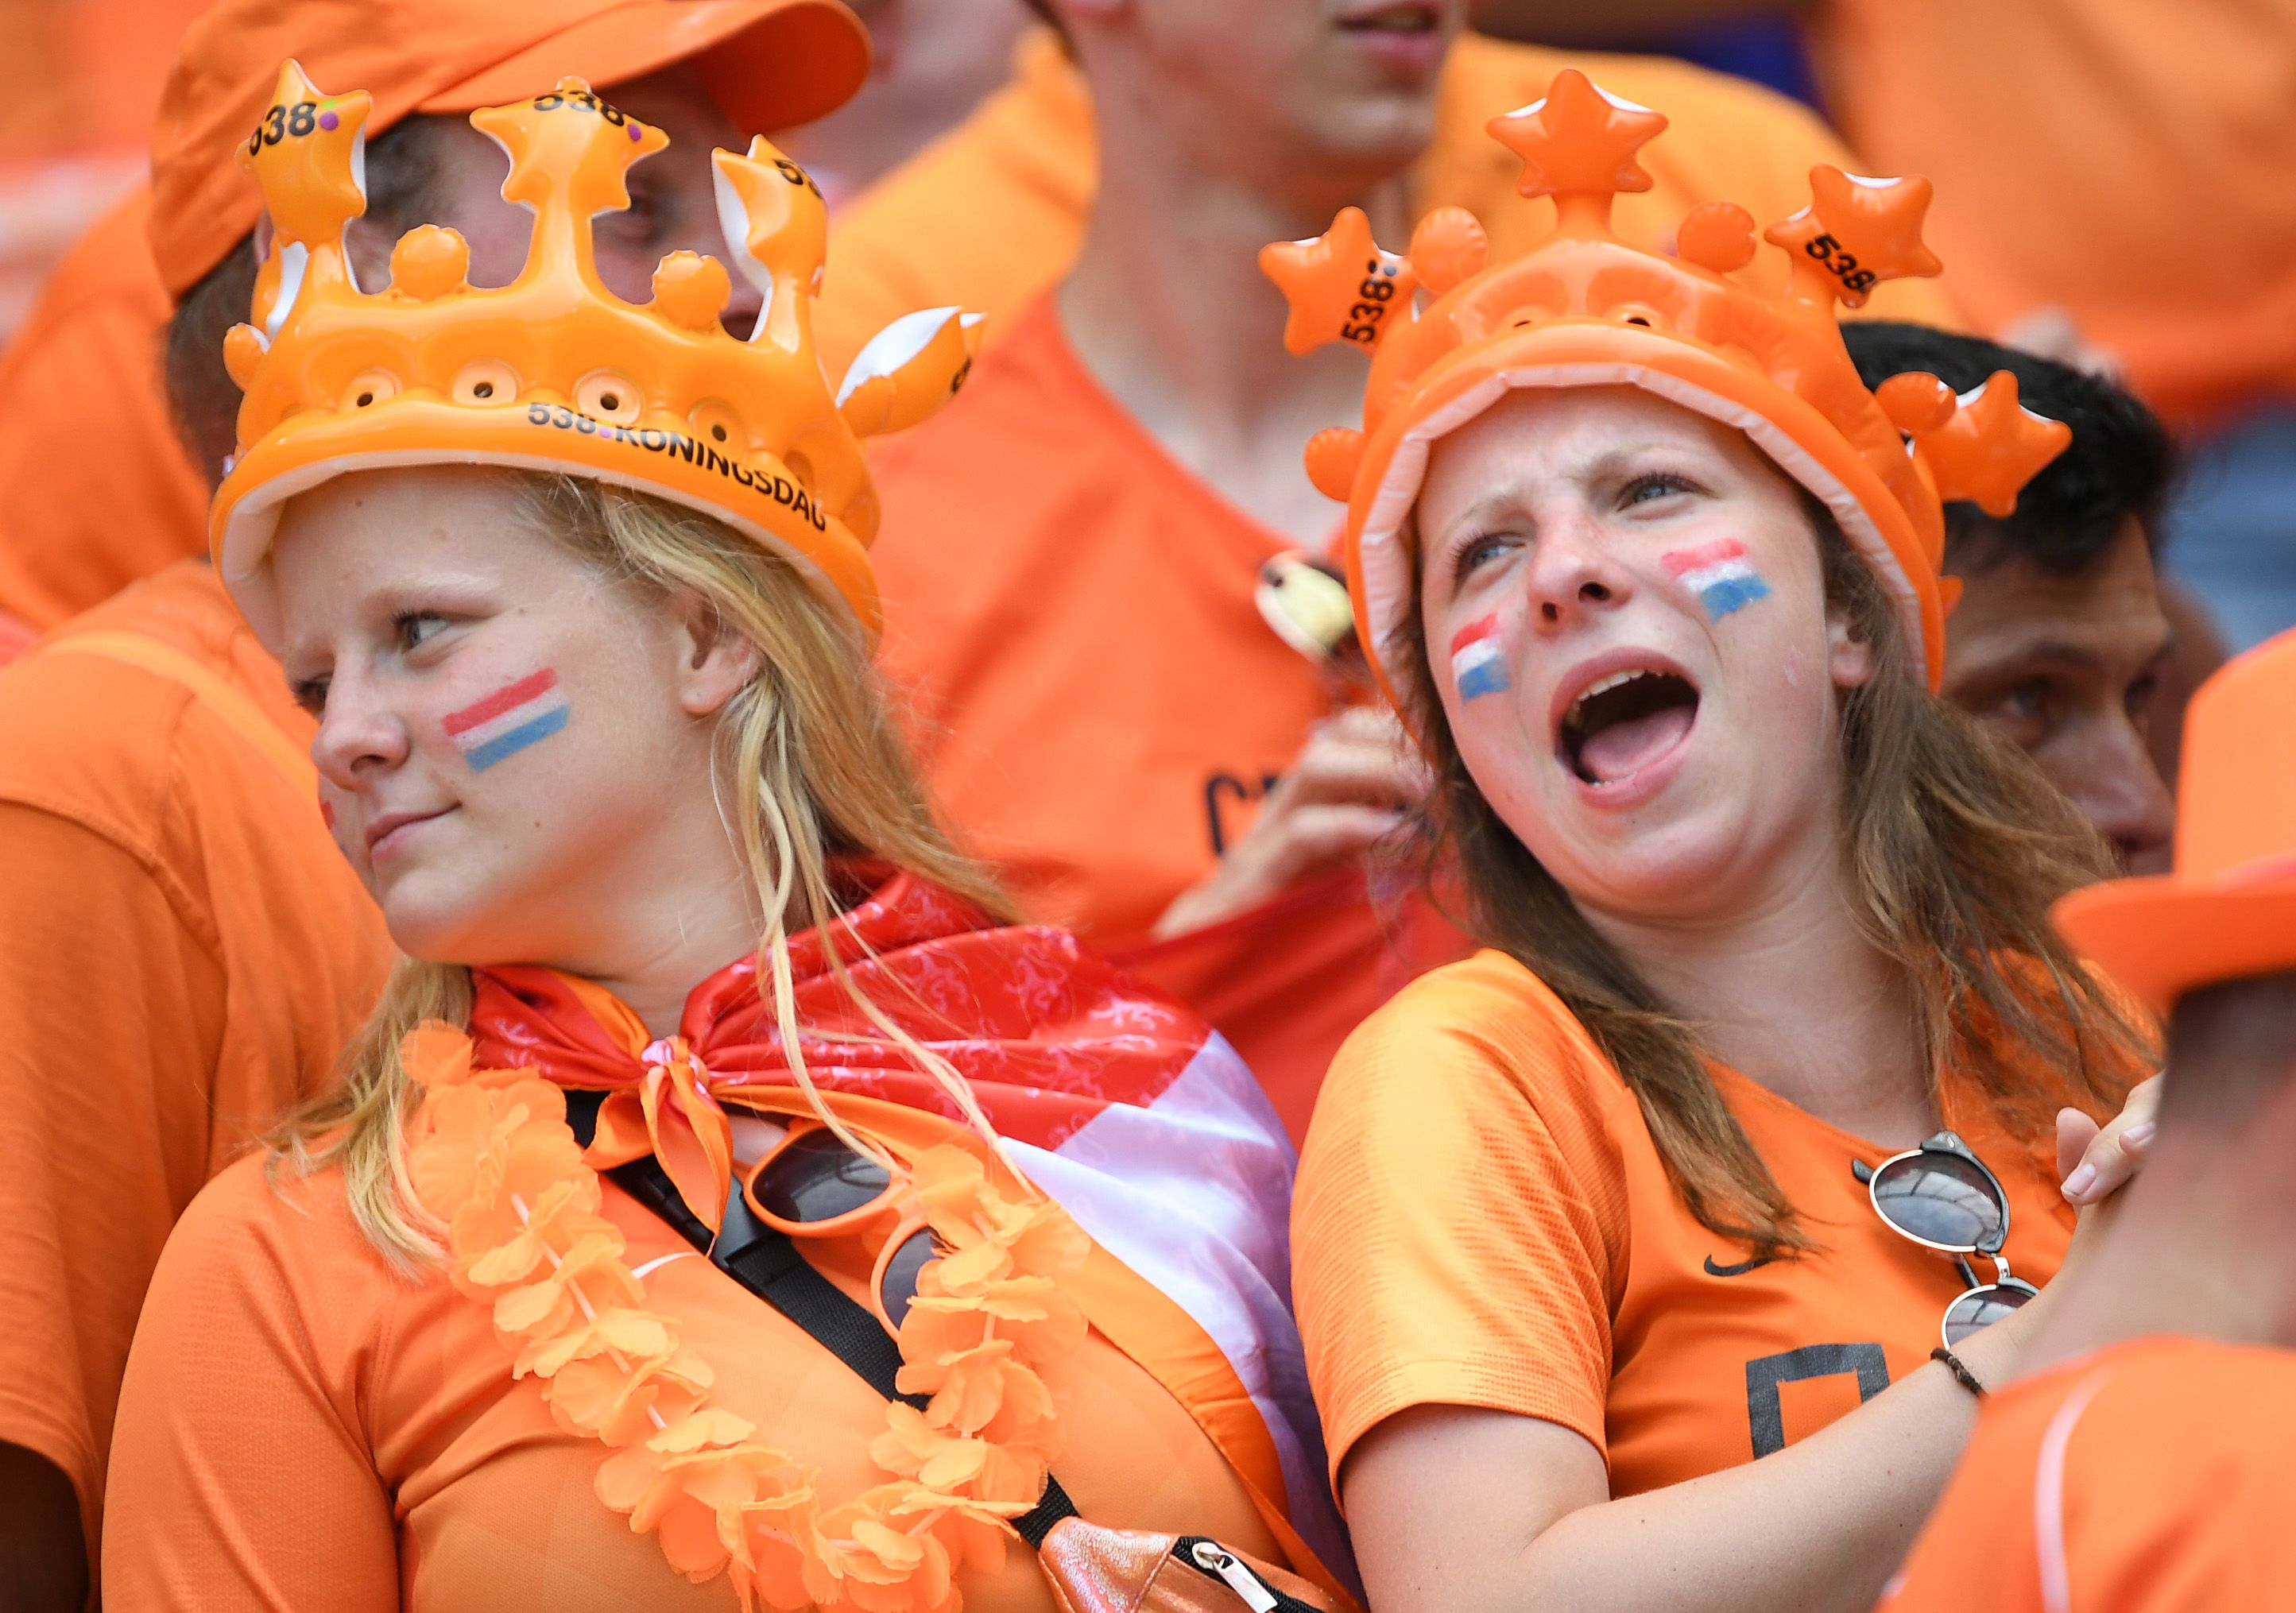 Dutch fans show their support via face paint.